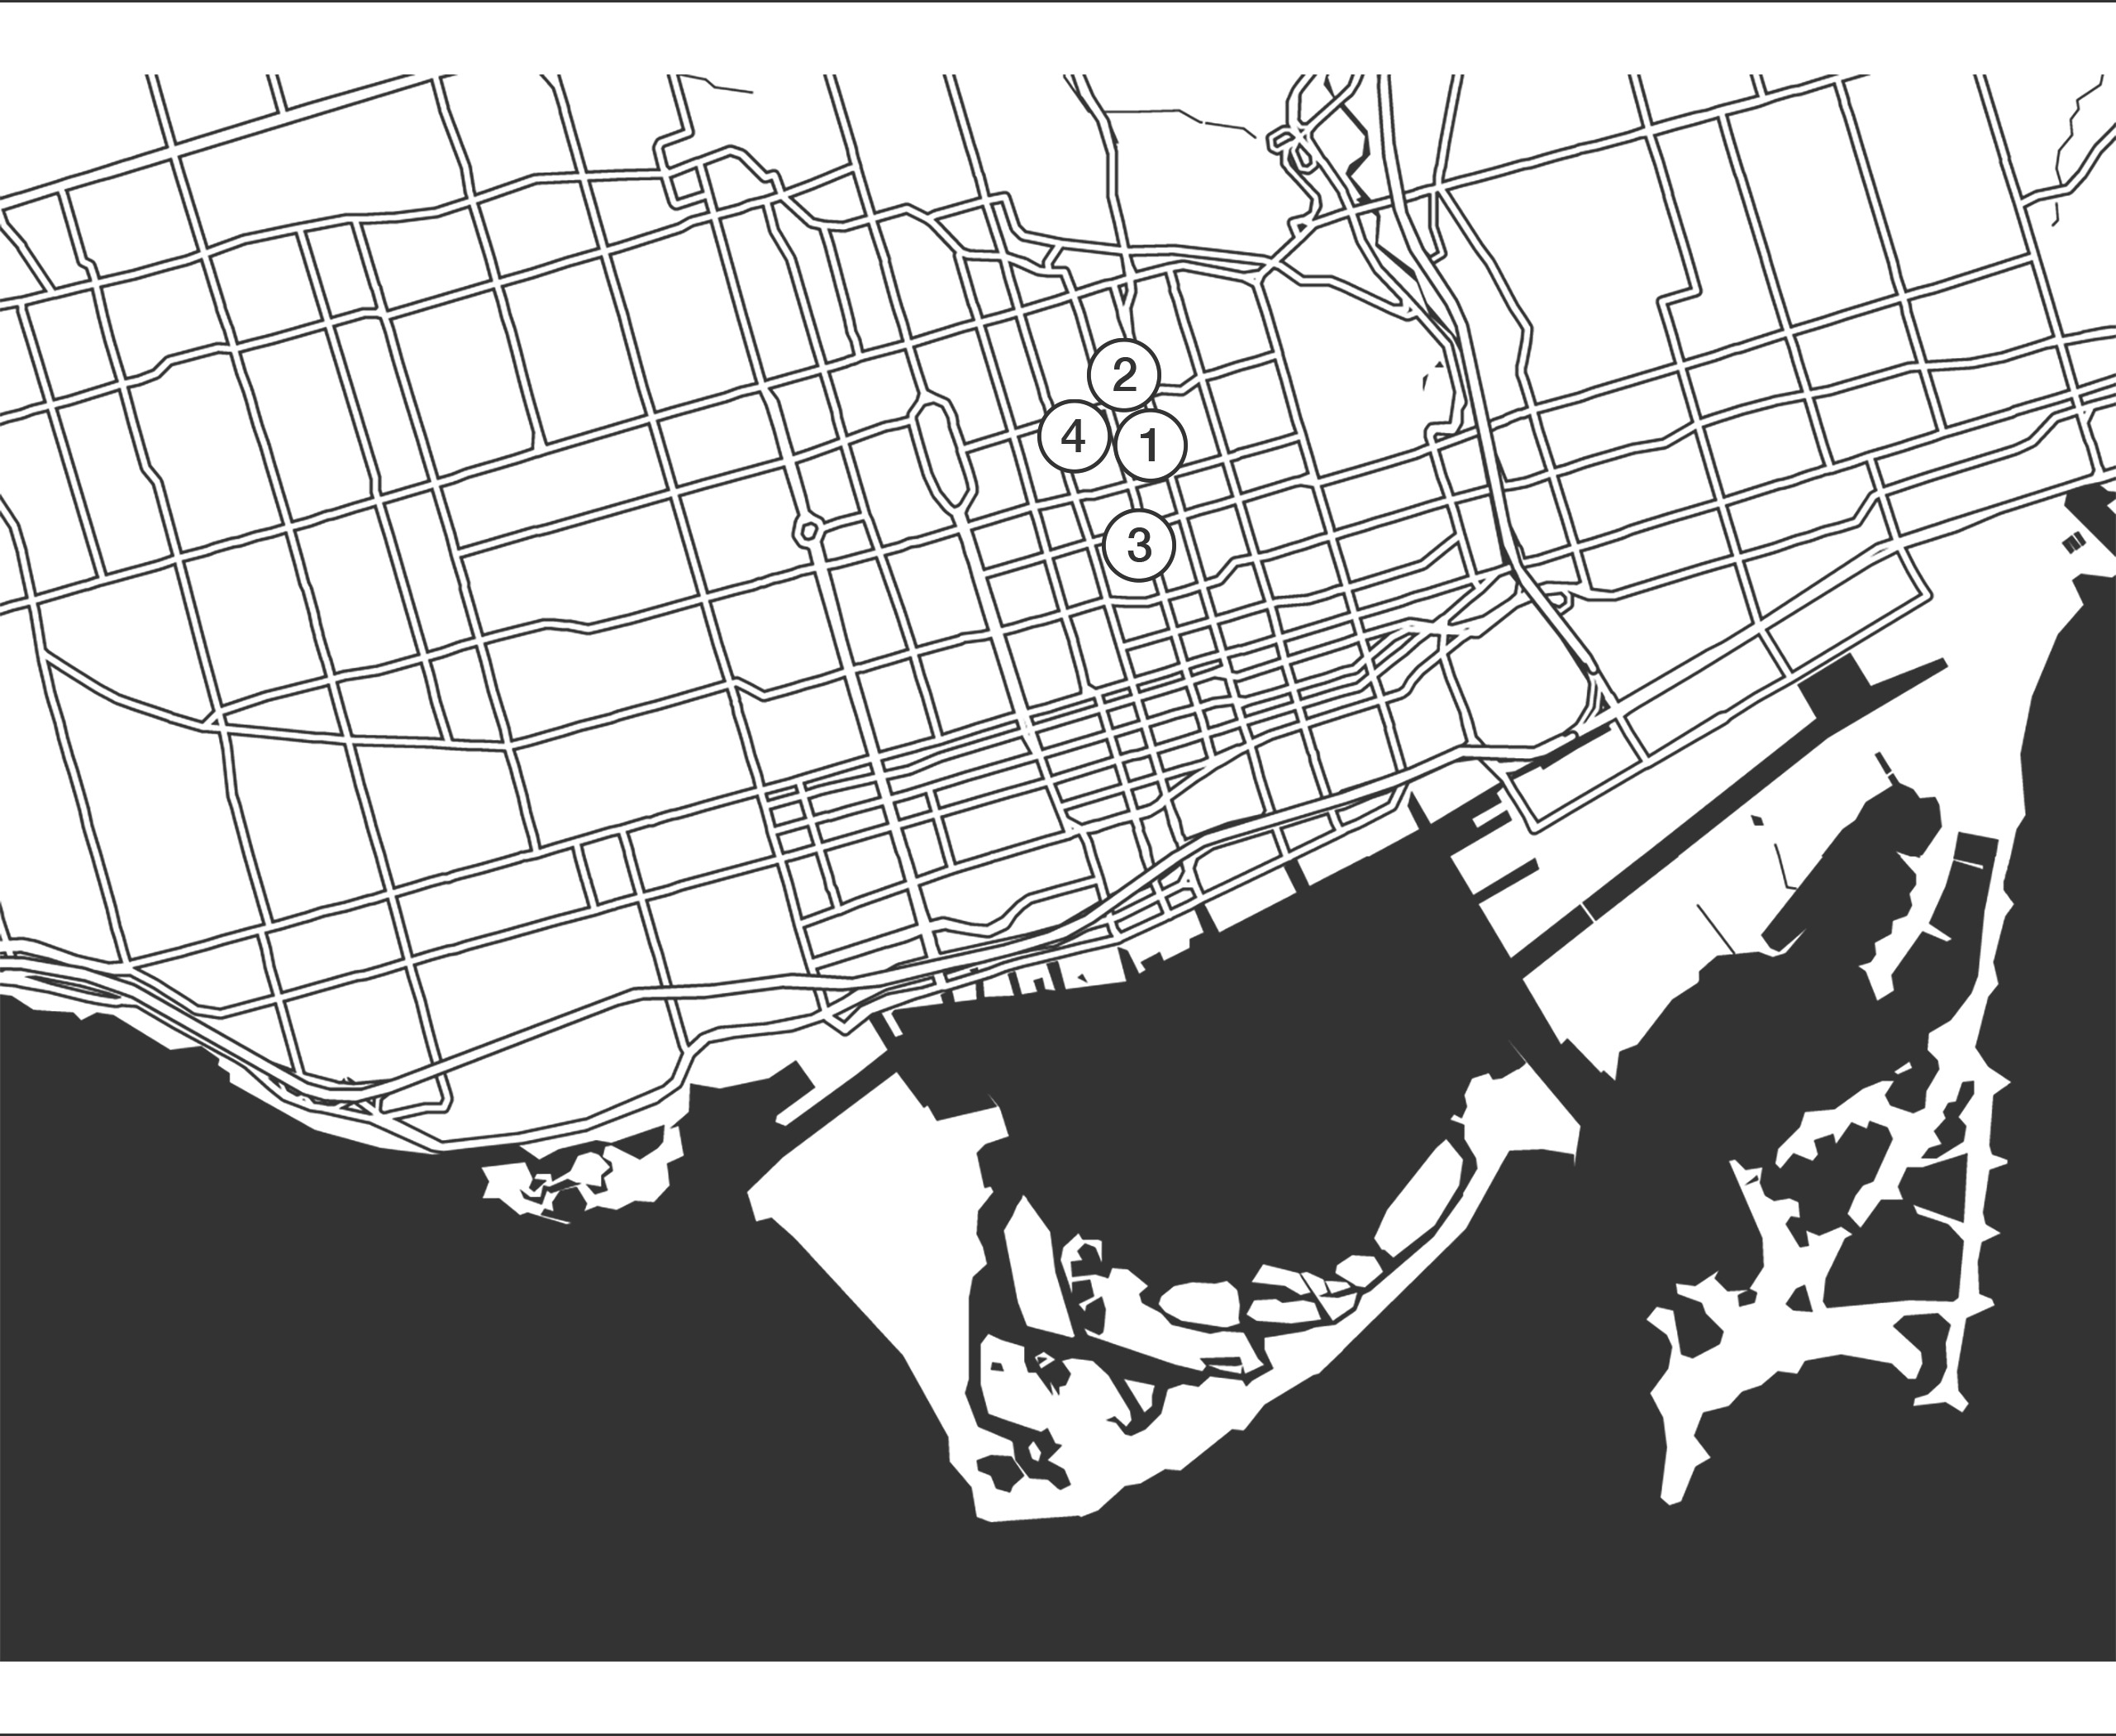 Map of Toronto